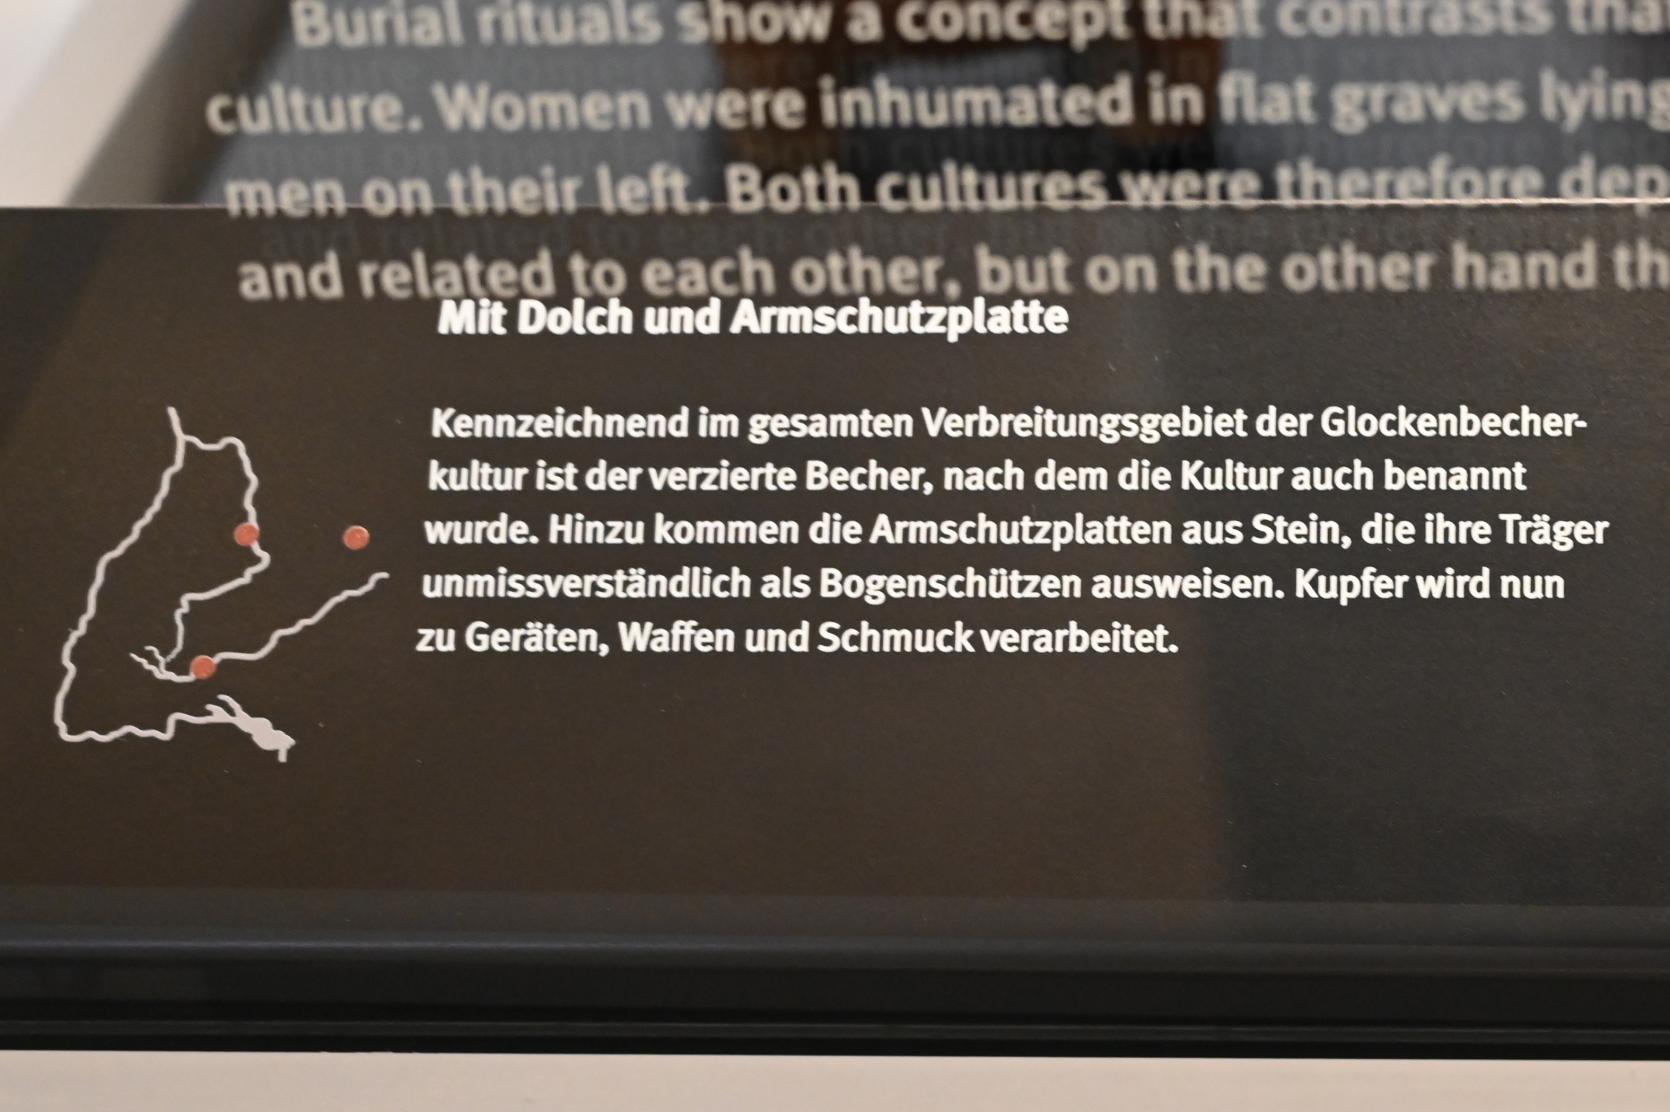 Kupferdolch, Neolithikum (Jungsteinzeit), 5500 - 1700 v. Chr., 2400 v. Chr., Bild 3/3